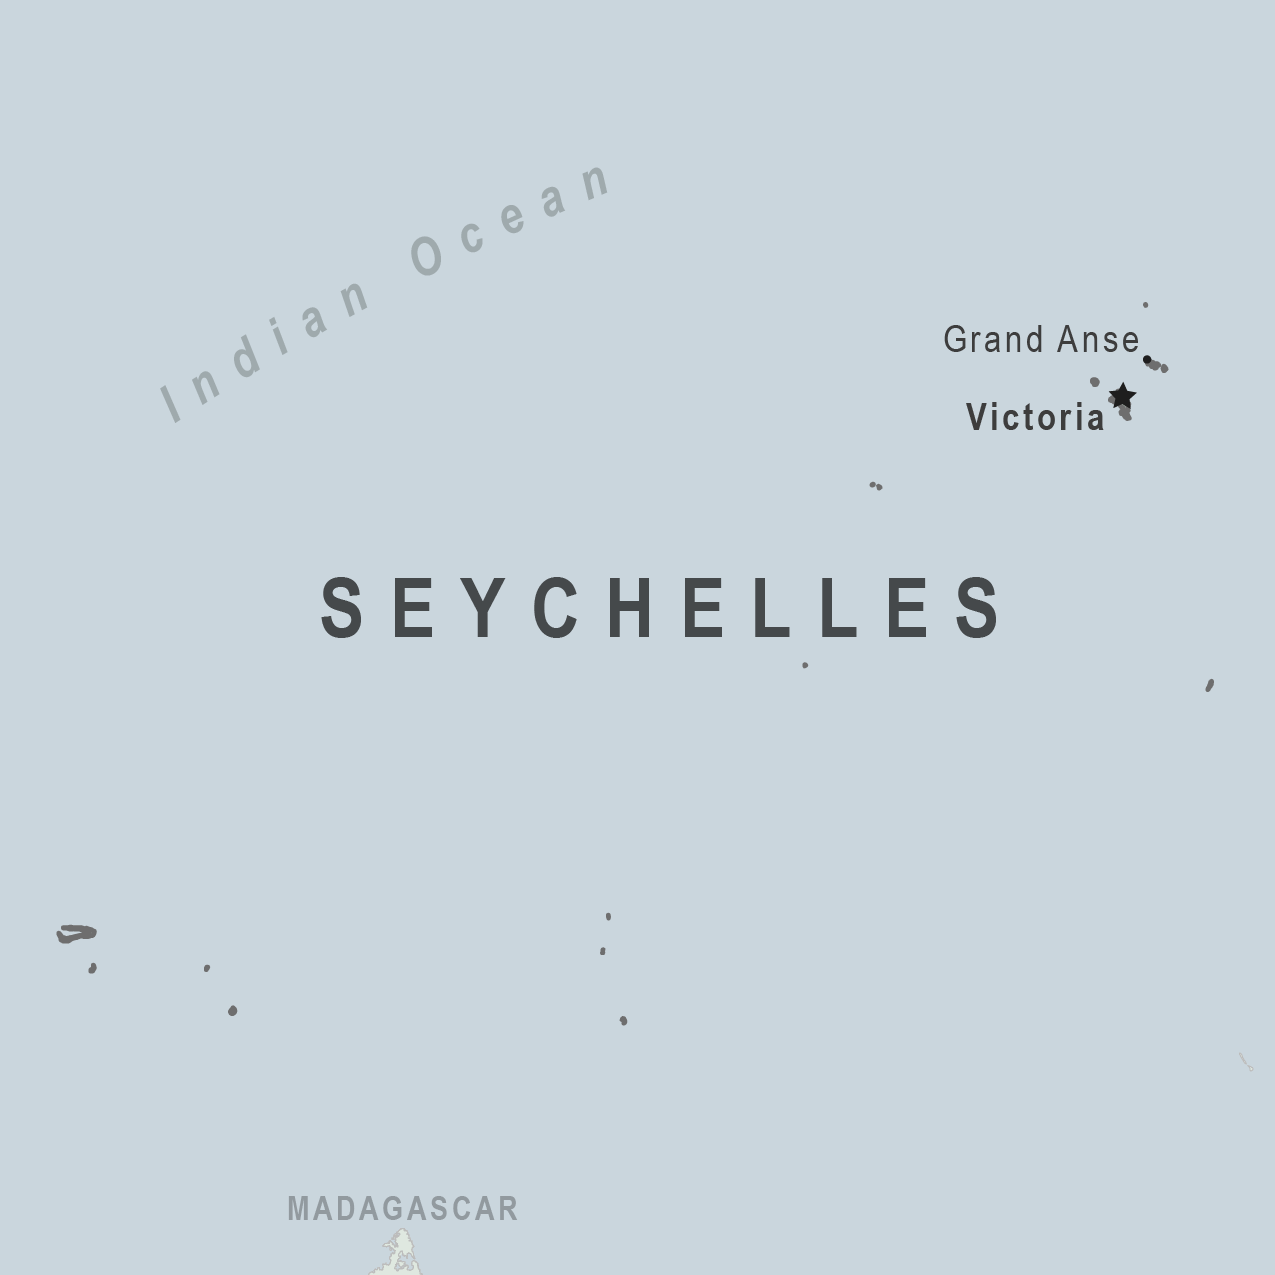 Map - Seychelles